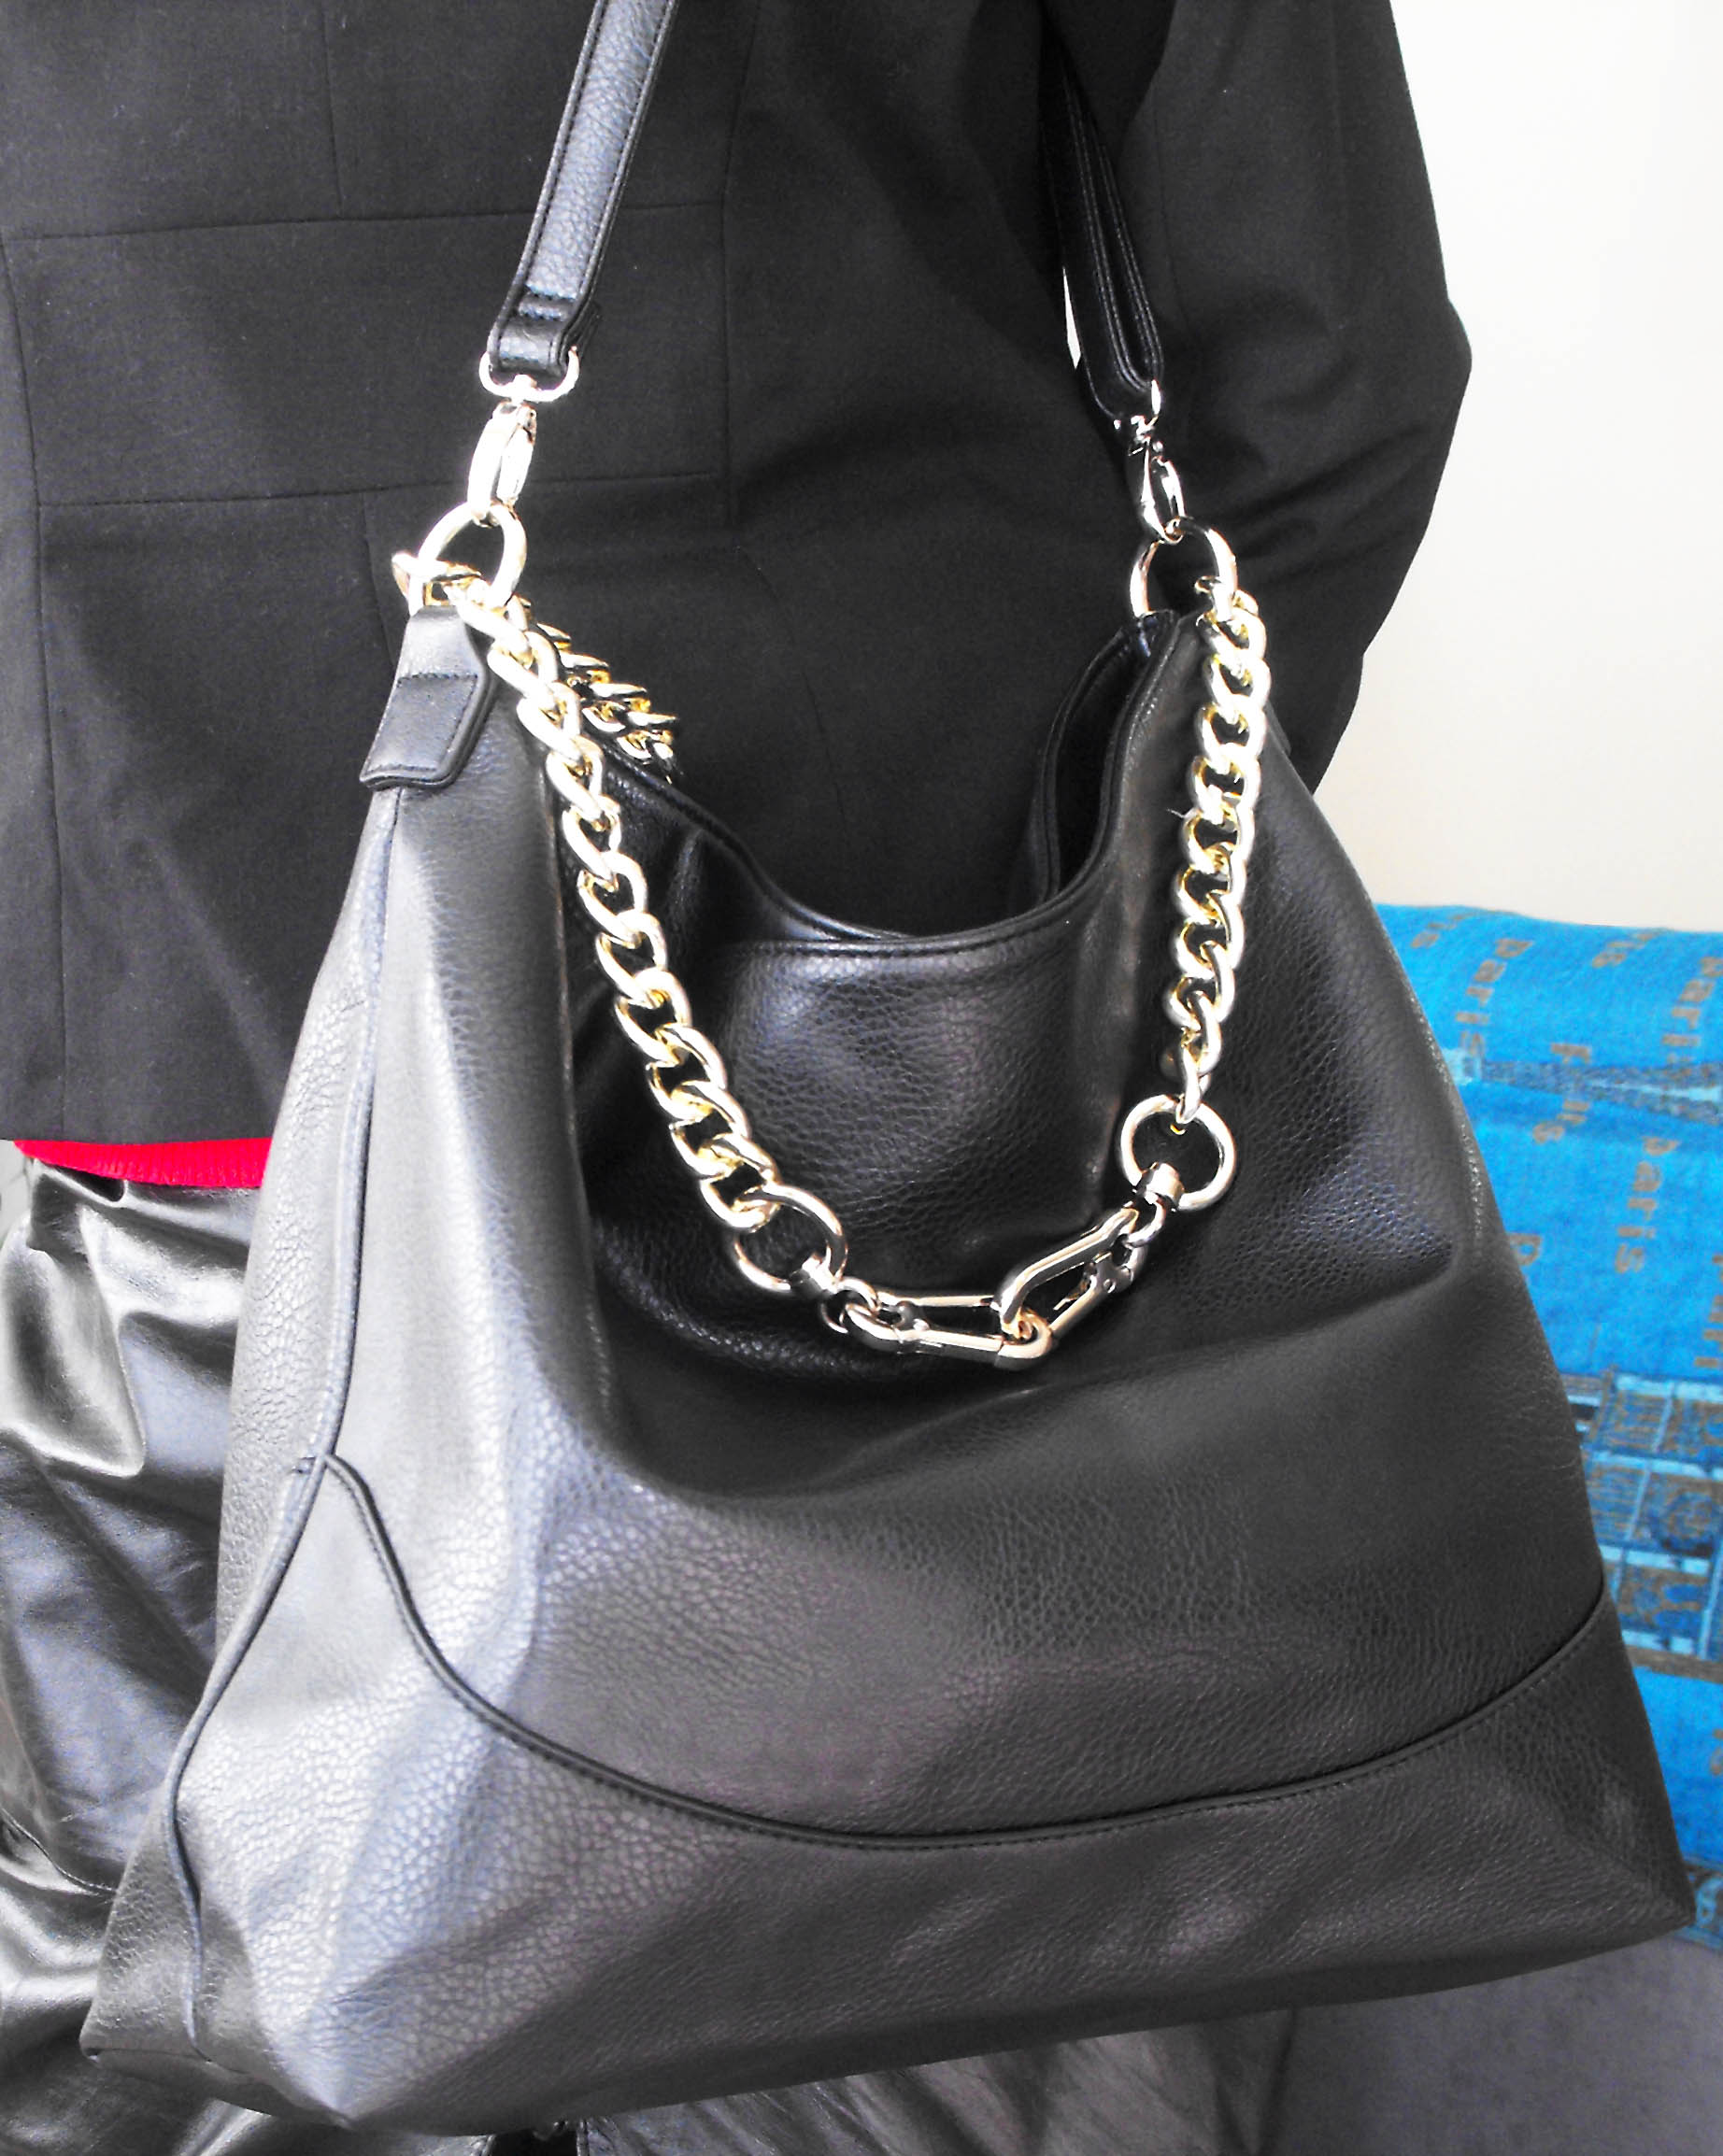 Justfab black faux leather Maxwell bag